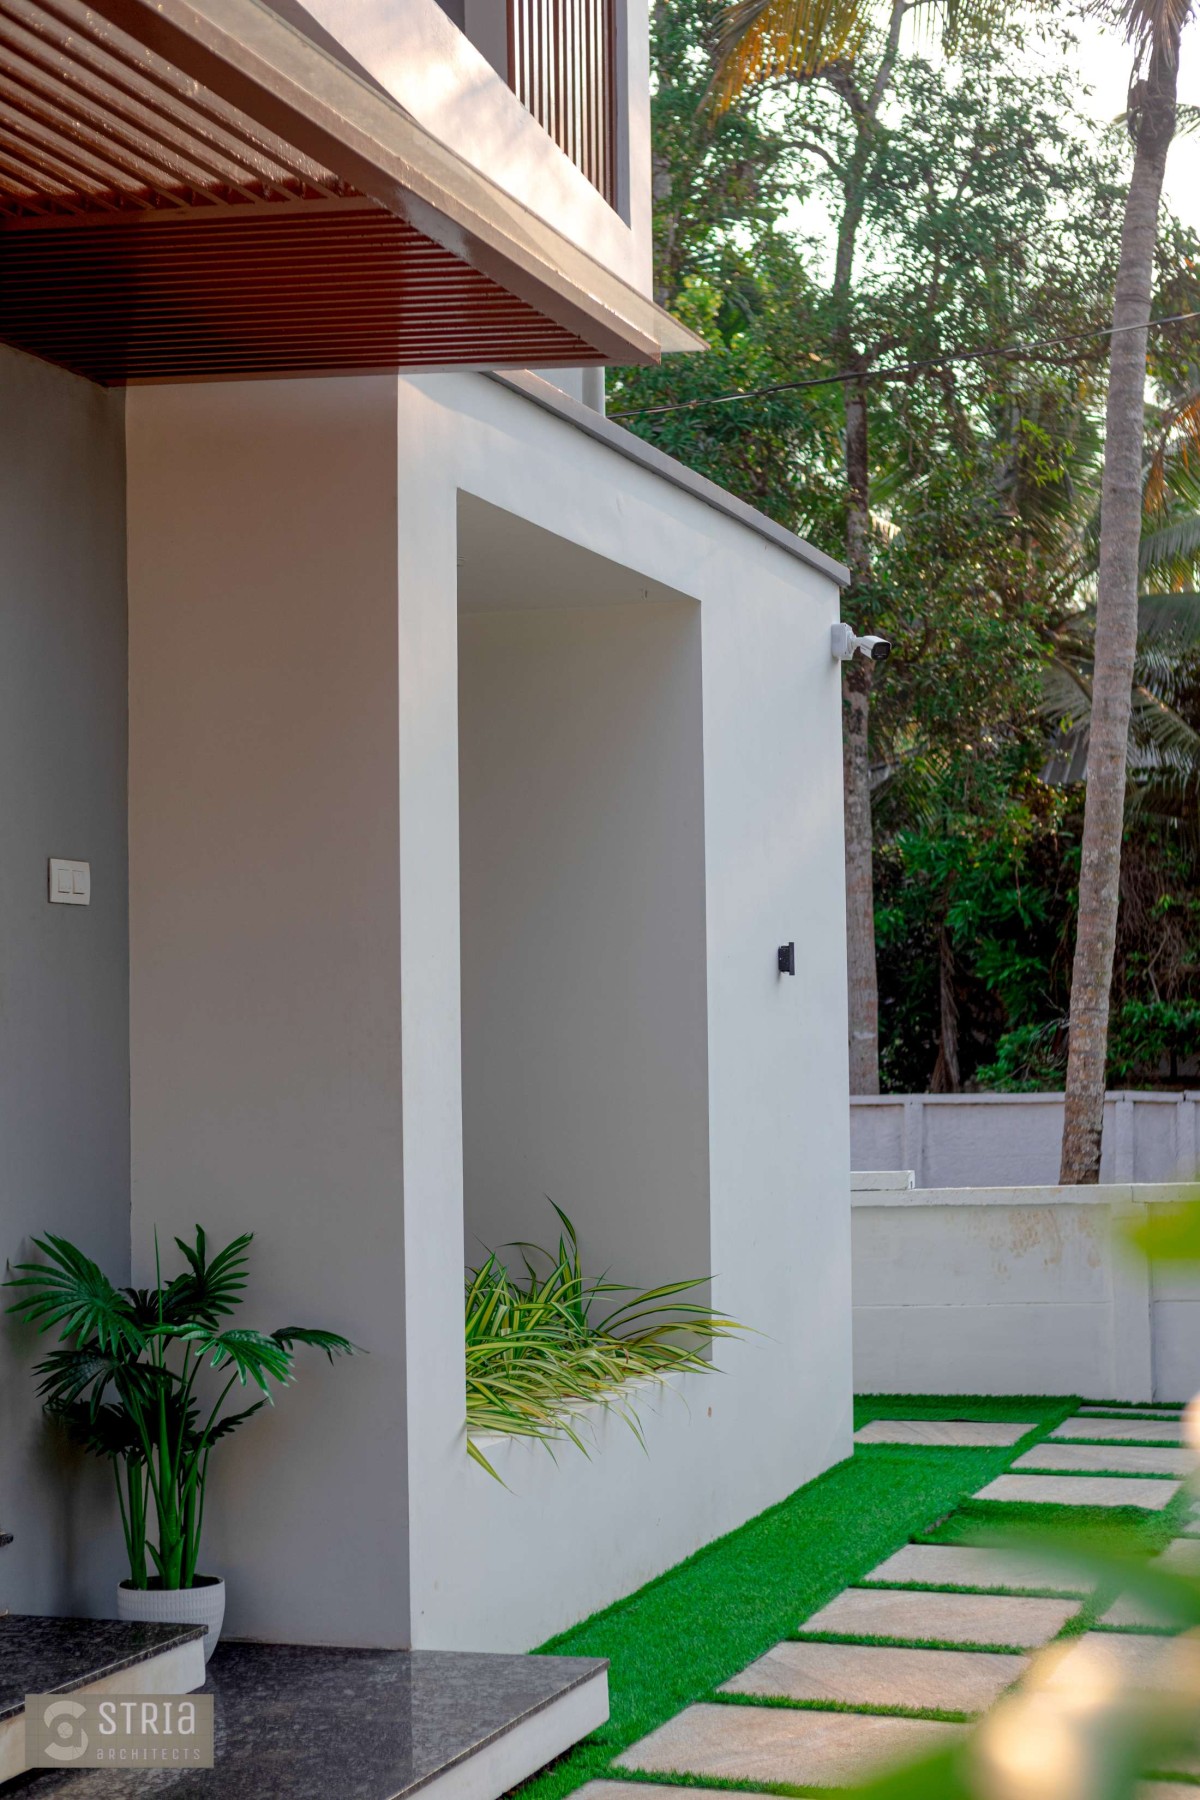 Porch of Vrindavanam by Stria Architects